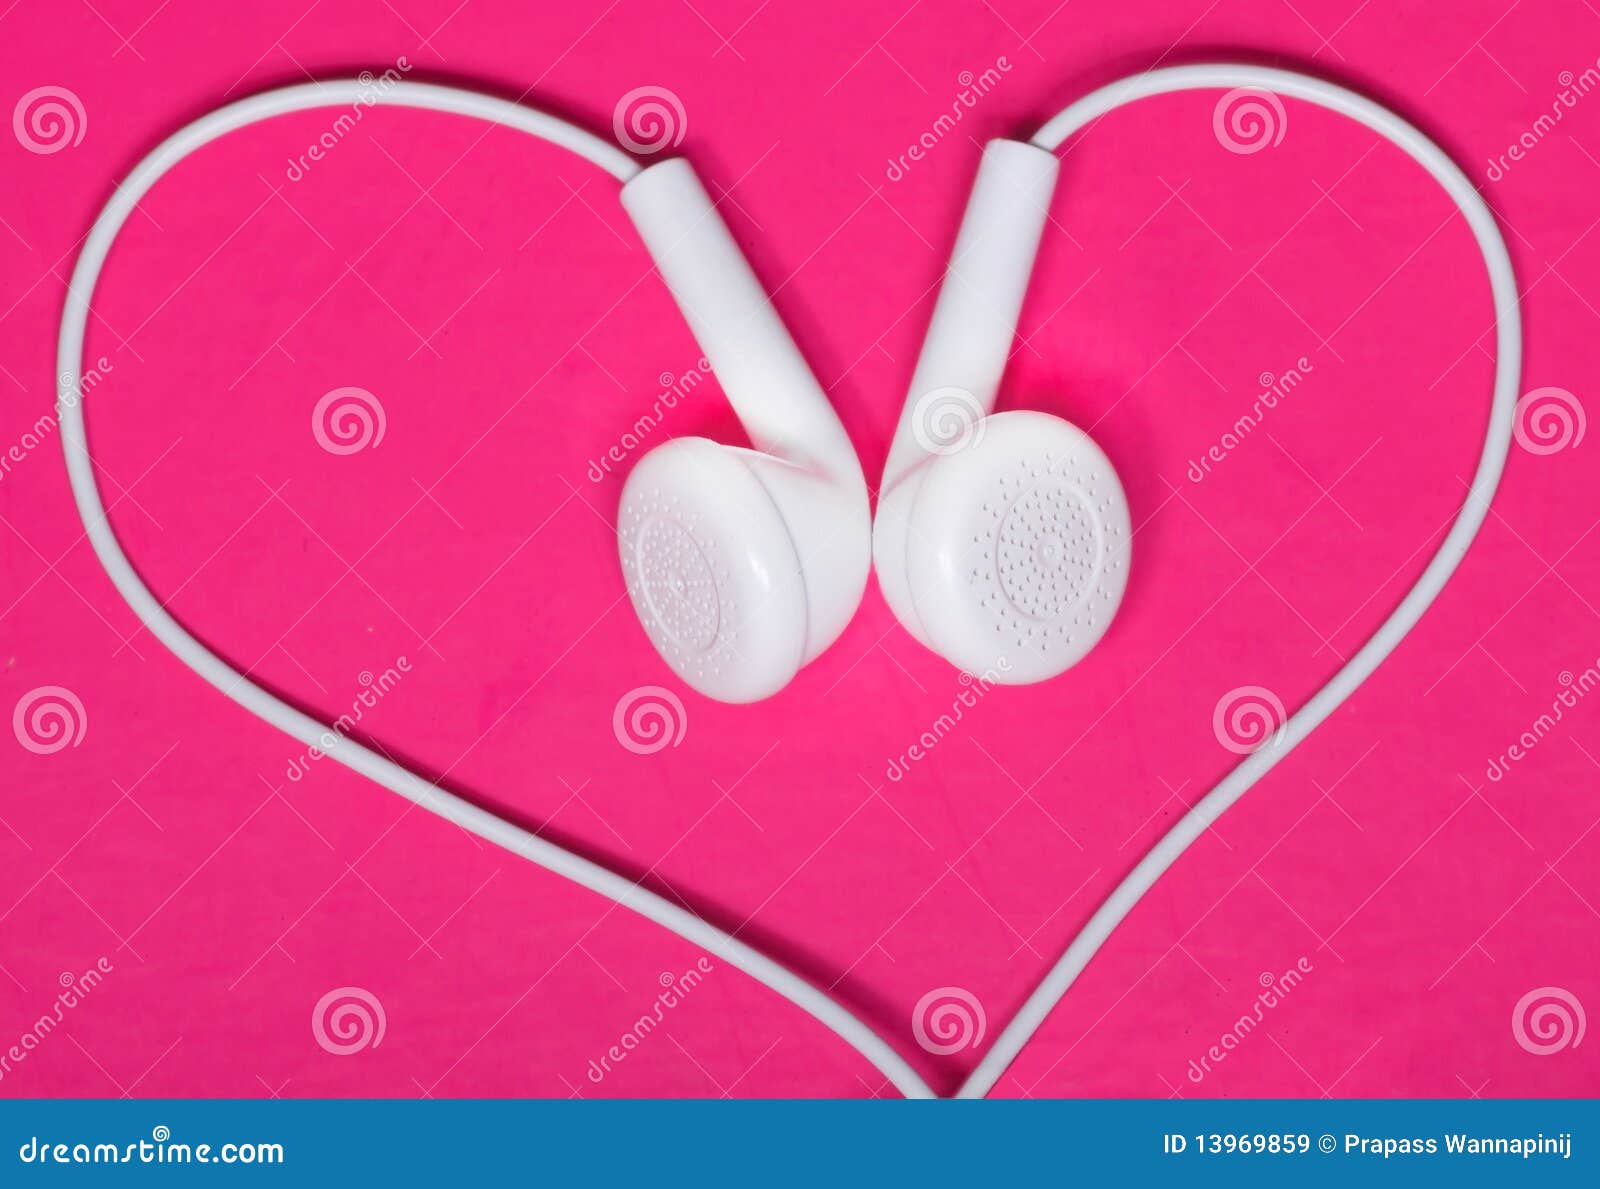 white earphone on pink background, heart